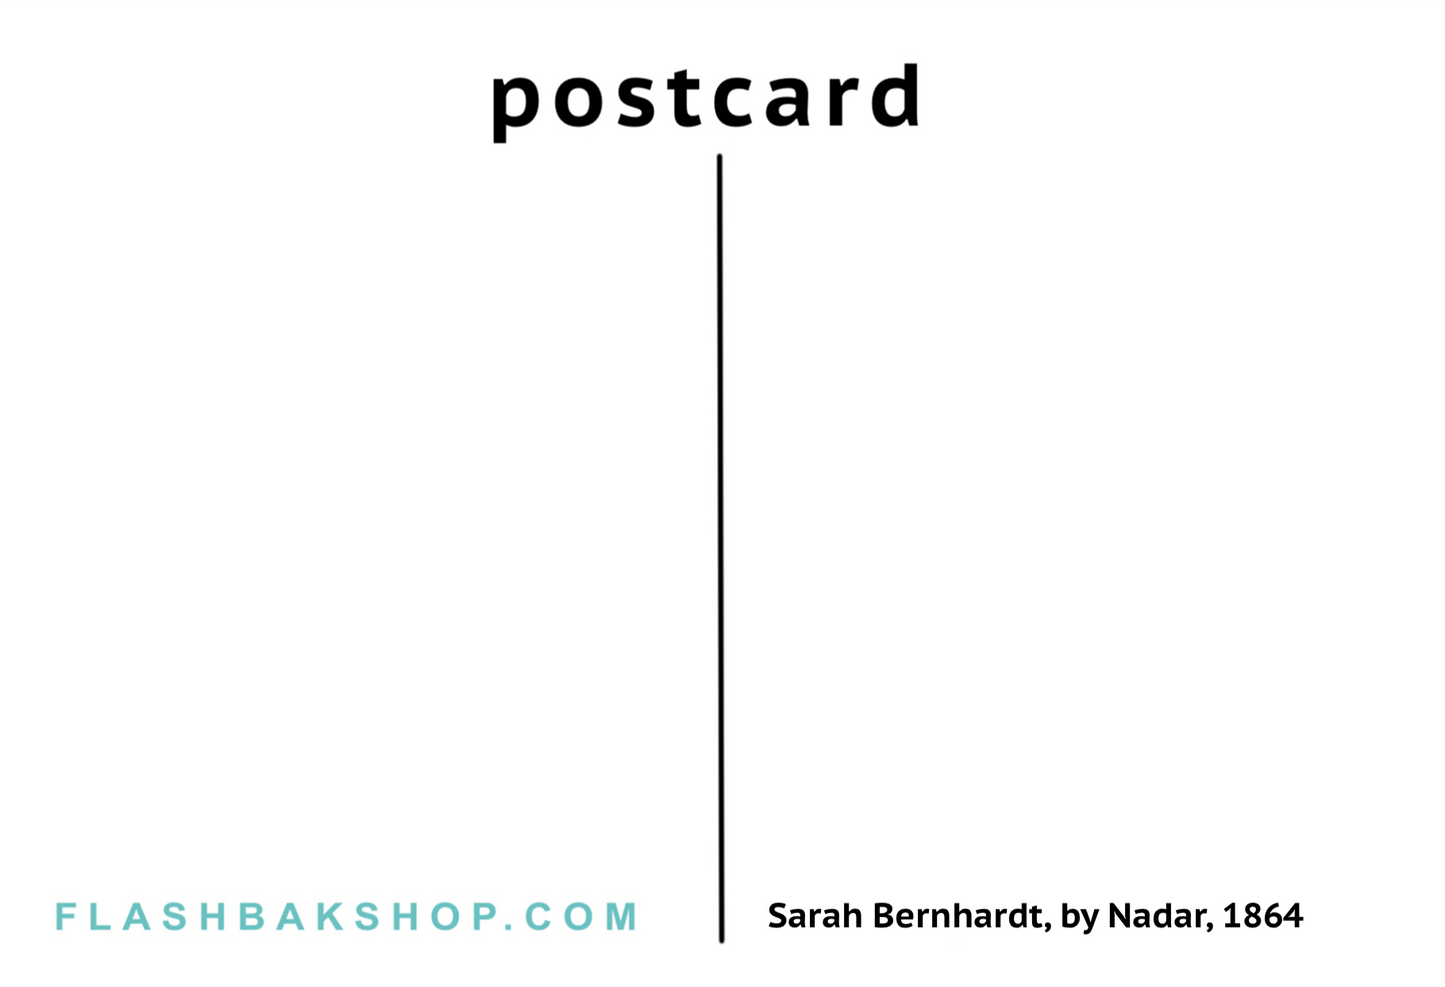 Sarah Bernhardt par Nadar, 1864 - Carte postale